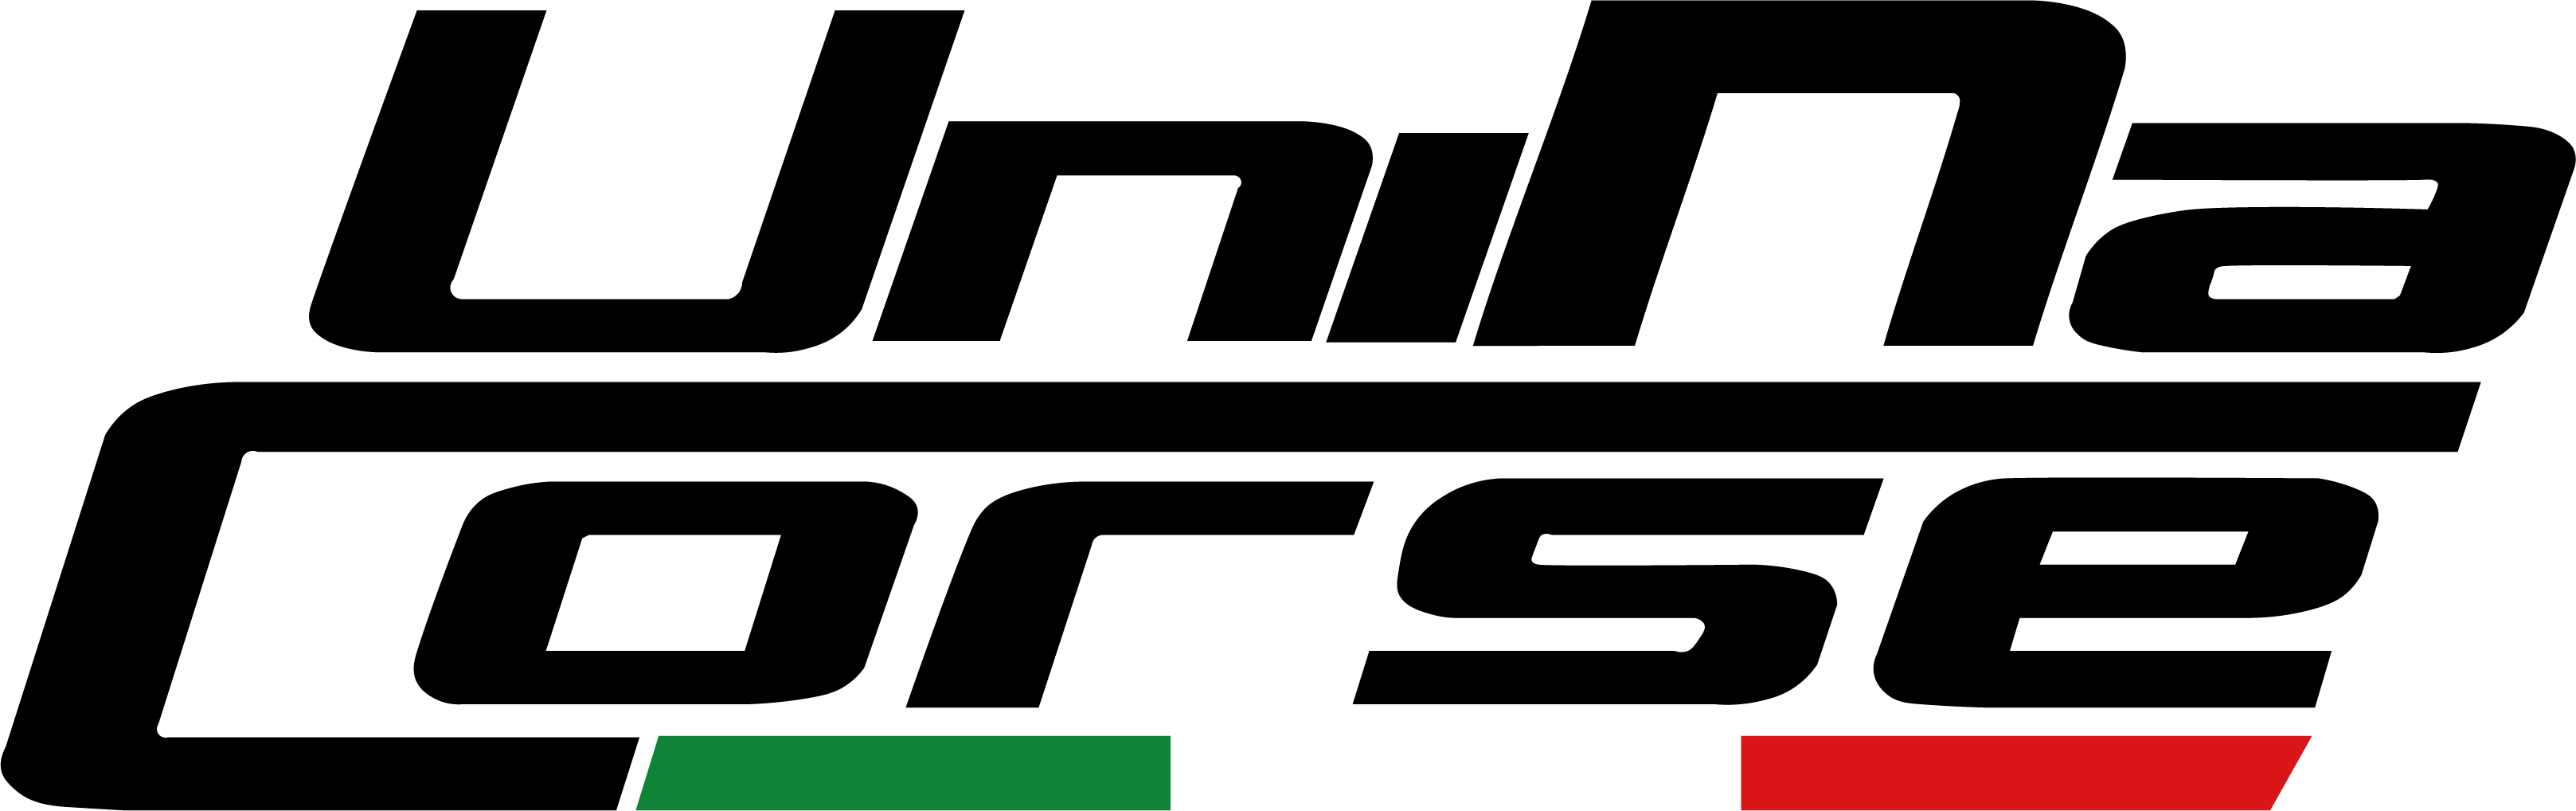 Logo unina corse nero 2022